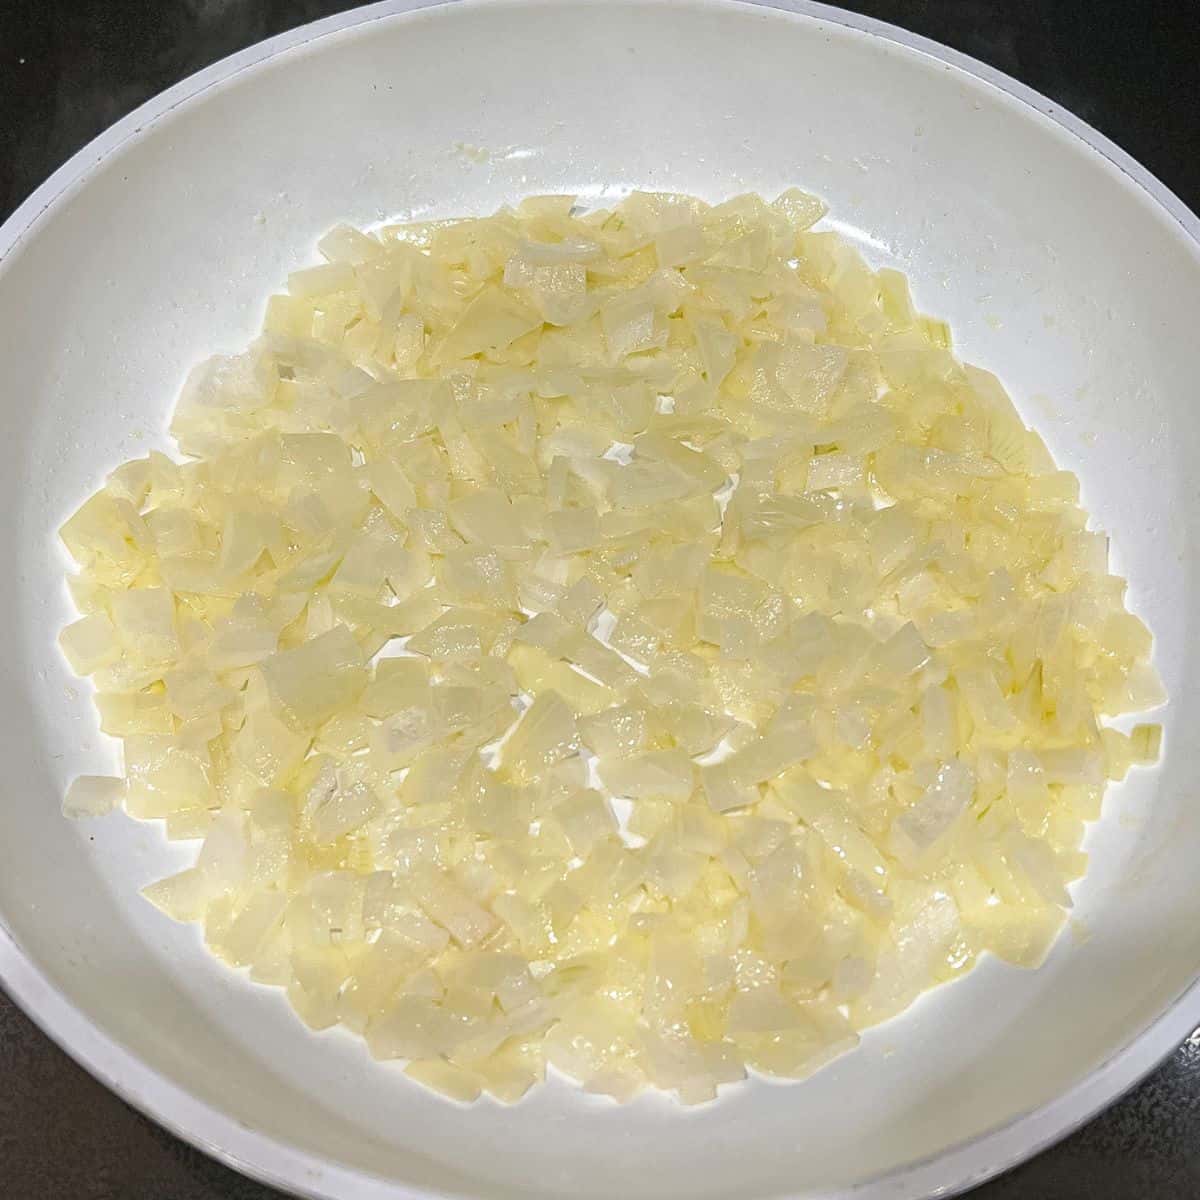 Saute onion until translucent and aromatic.